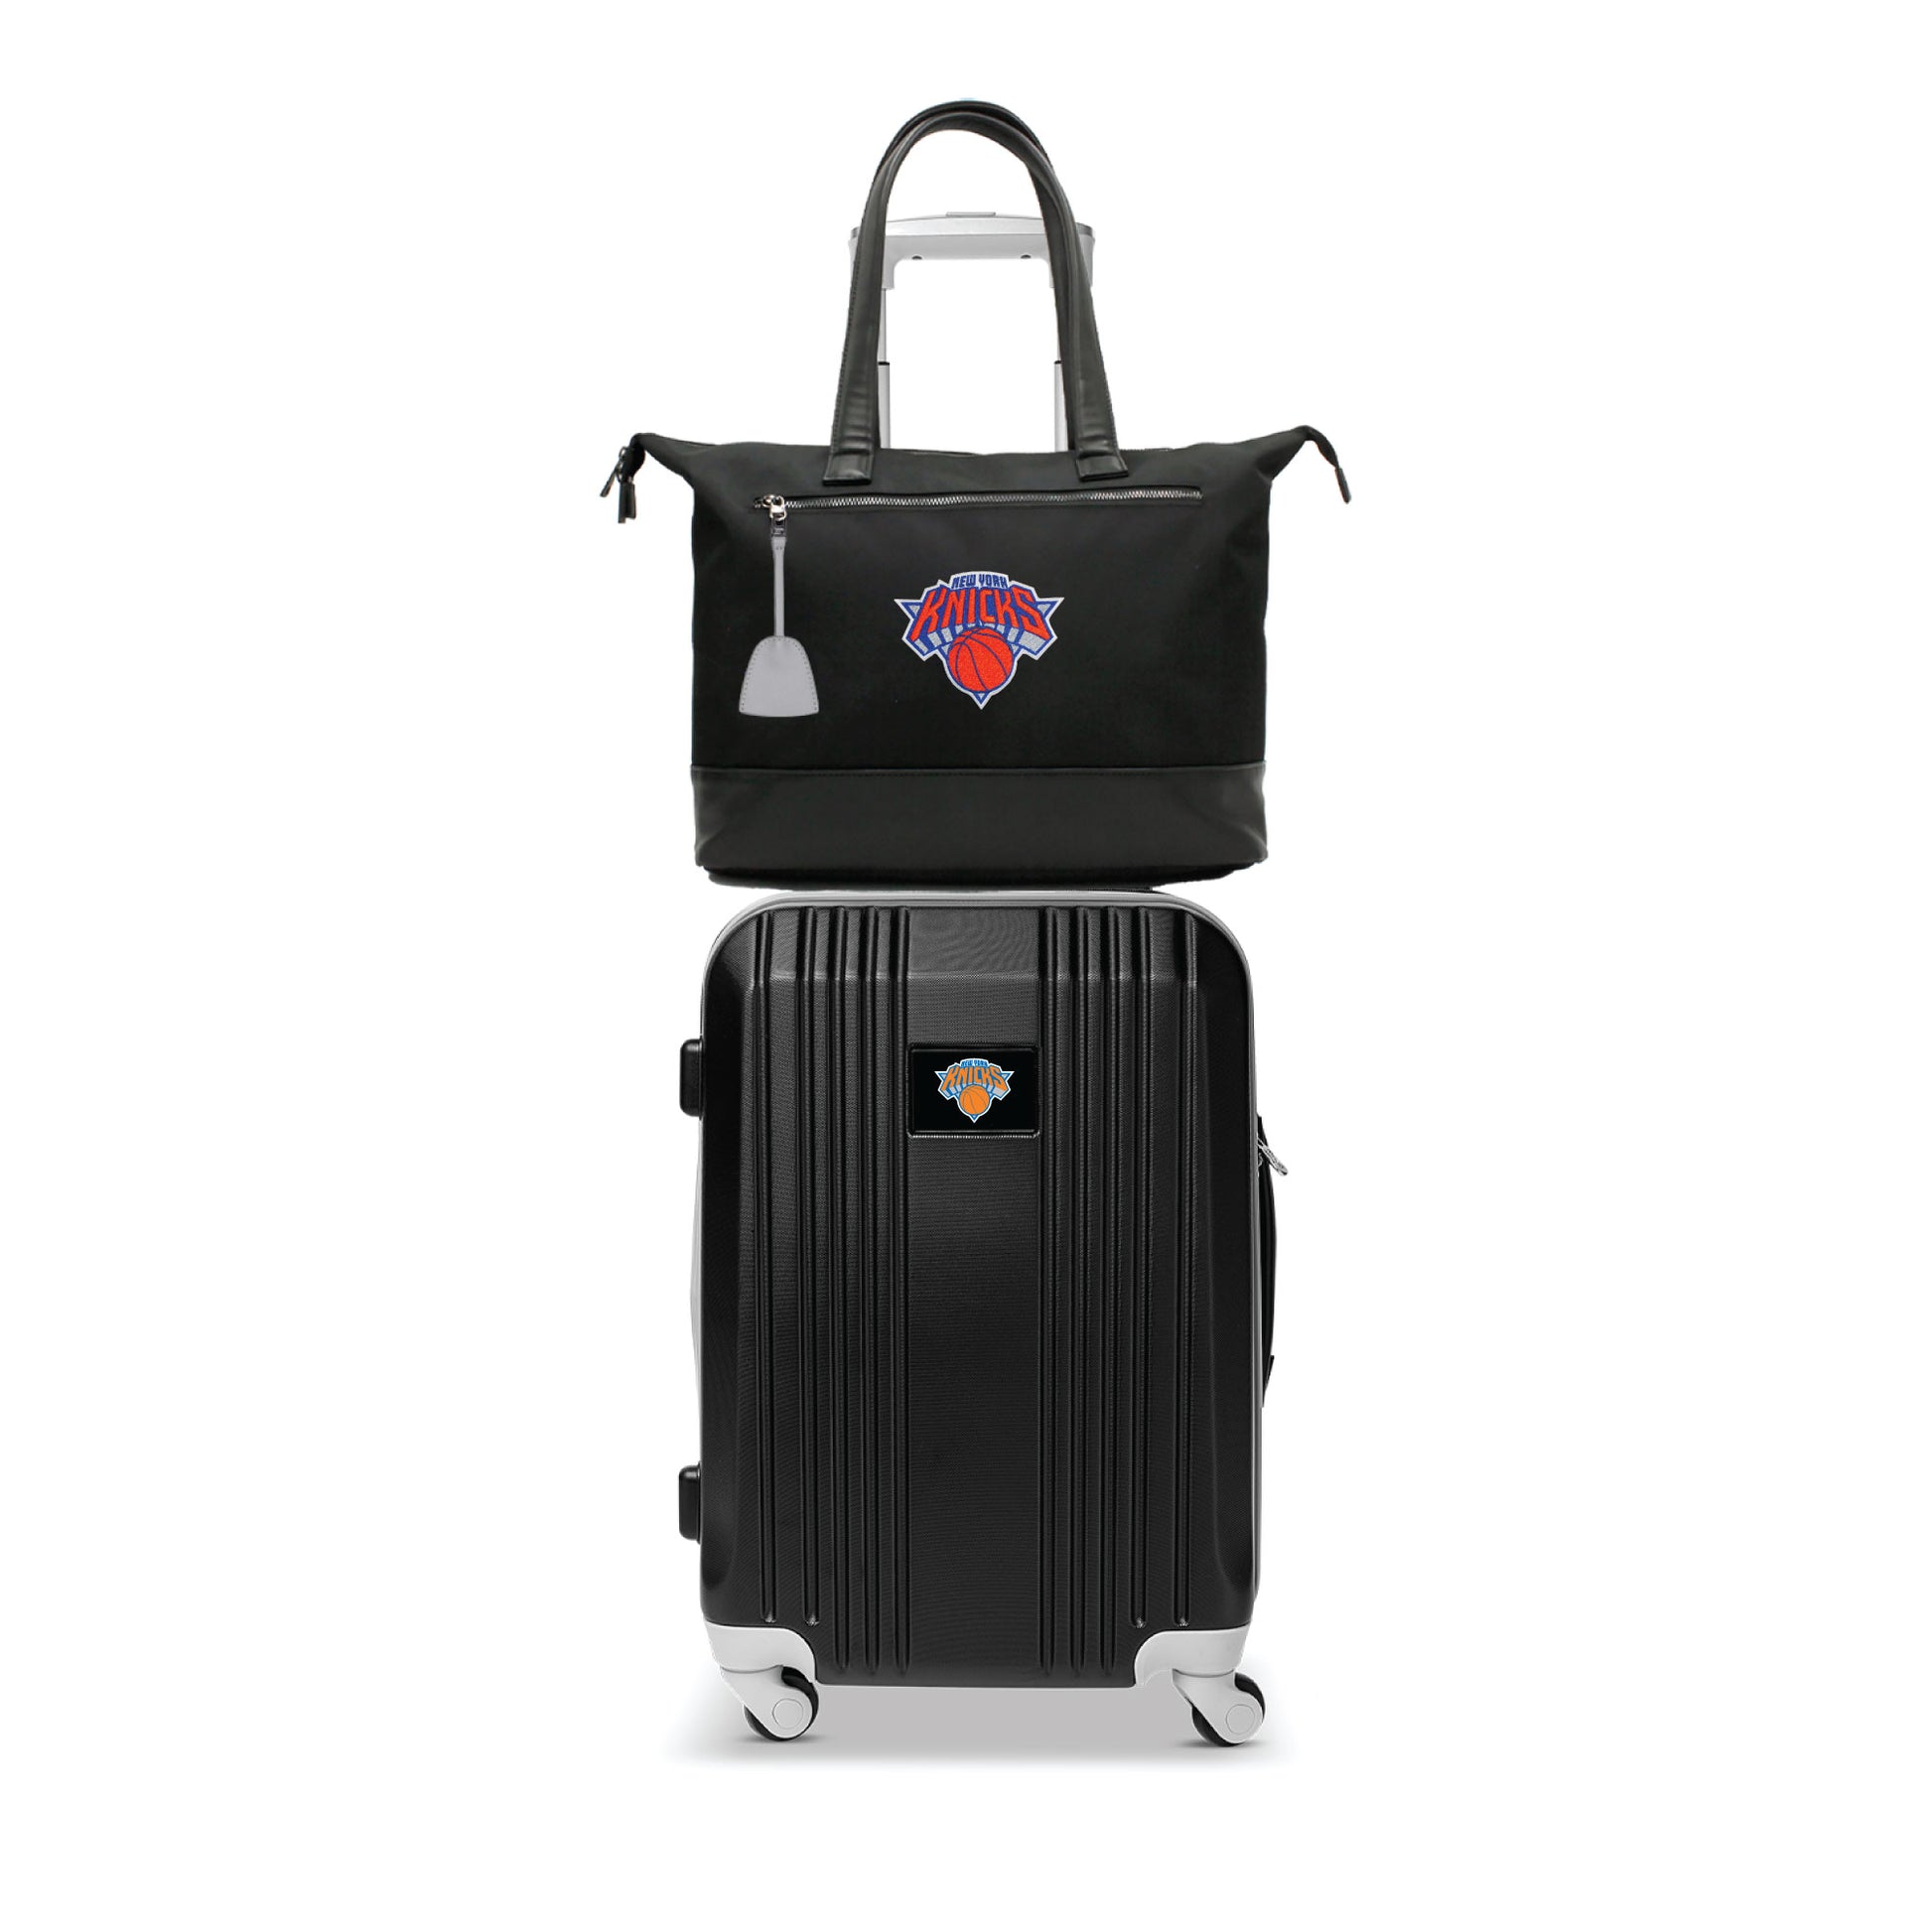 New York Knicks Premium Laptop Tote Bag and Luggage Set